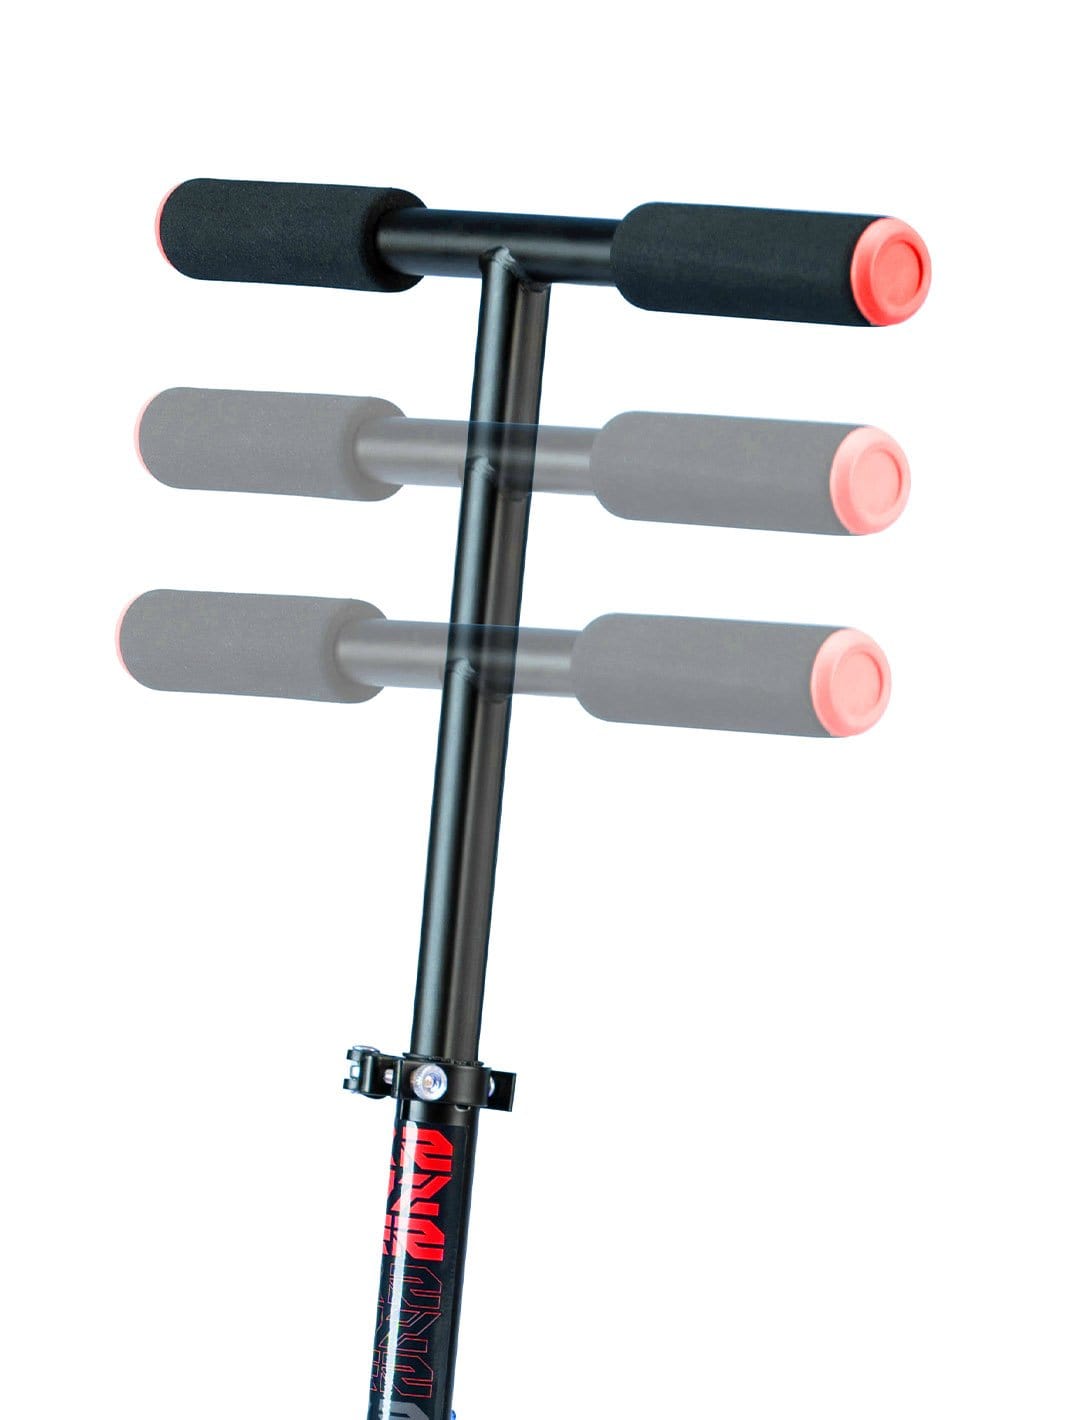 Madd Gear Razor Kruzer 200 Adjustable Handle bars Teens Adults Red 200mm A5 Lux Aluminum